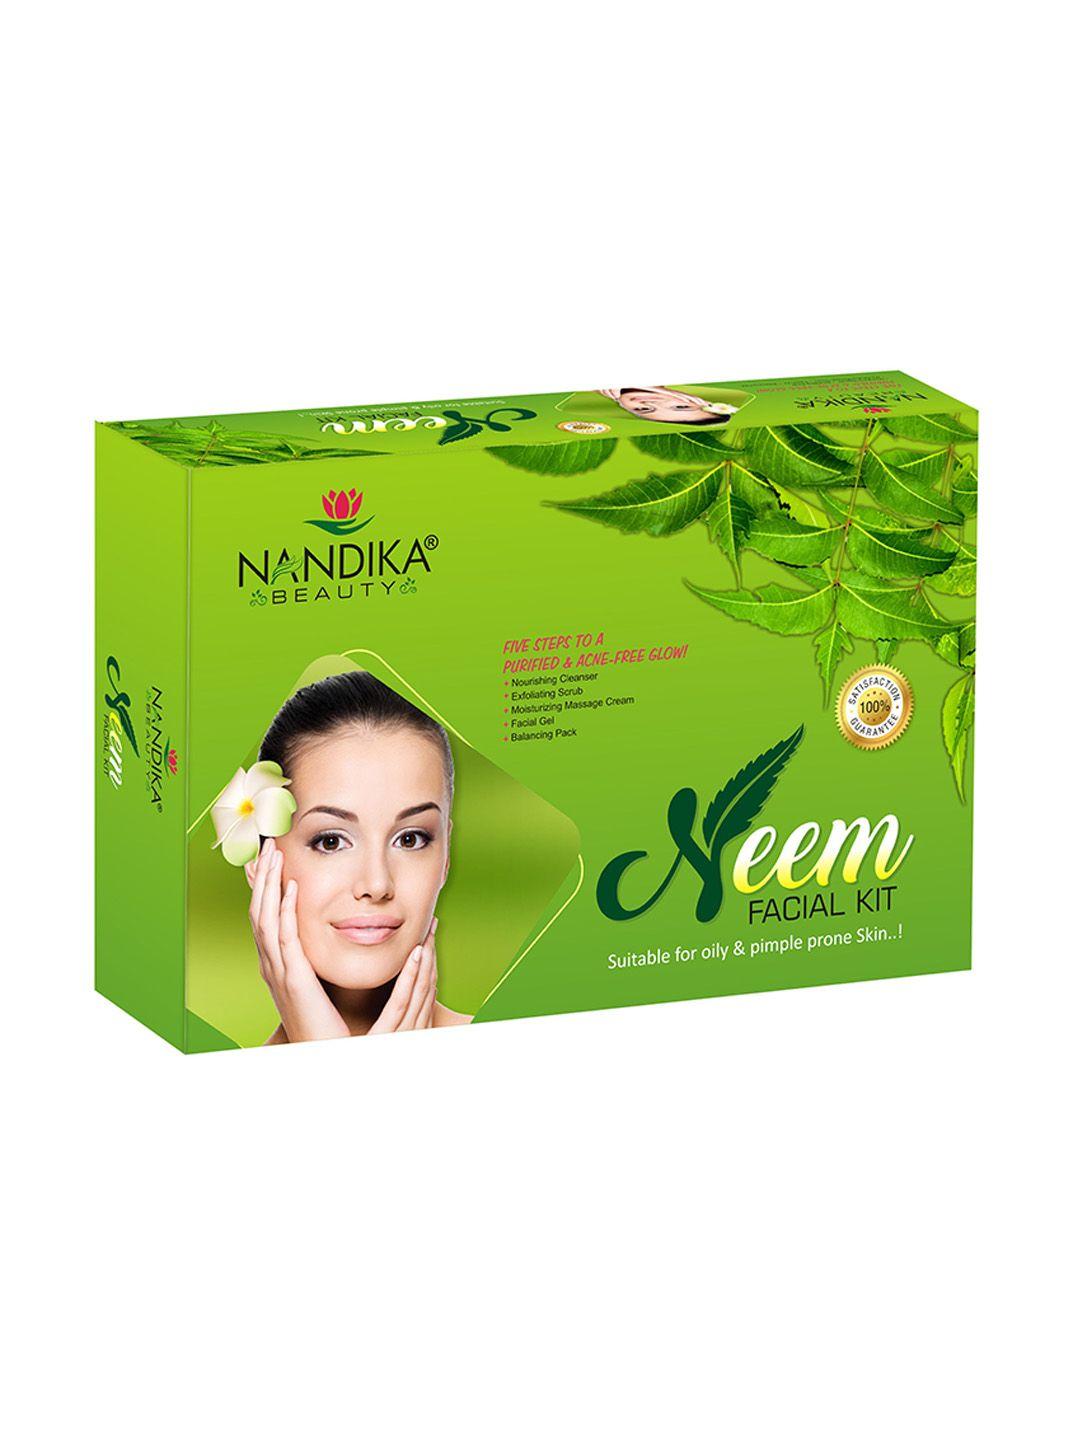 nandika beauty unisex neem facial kit for oily & acne prone skin - 310g